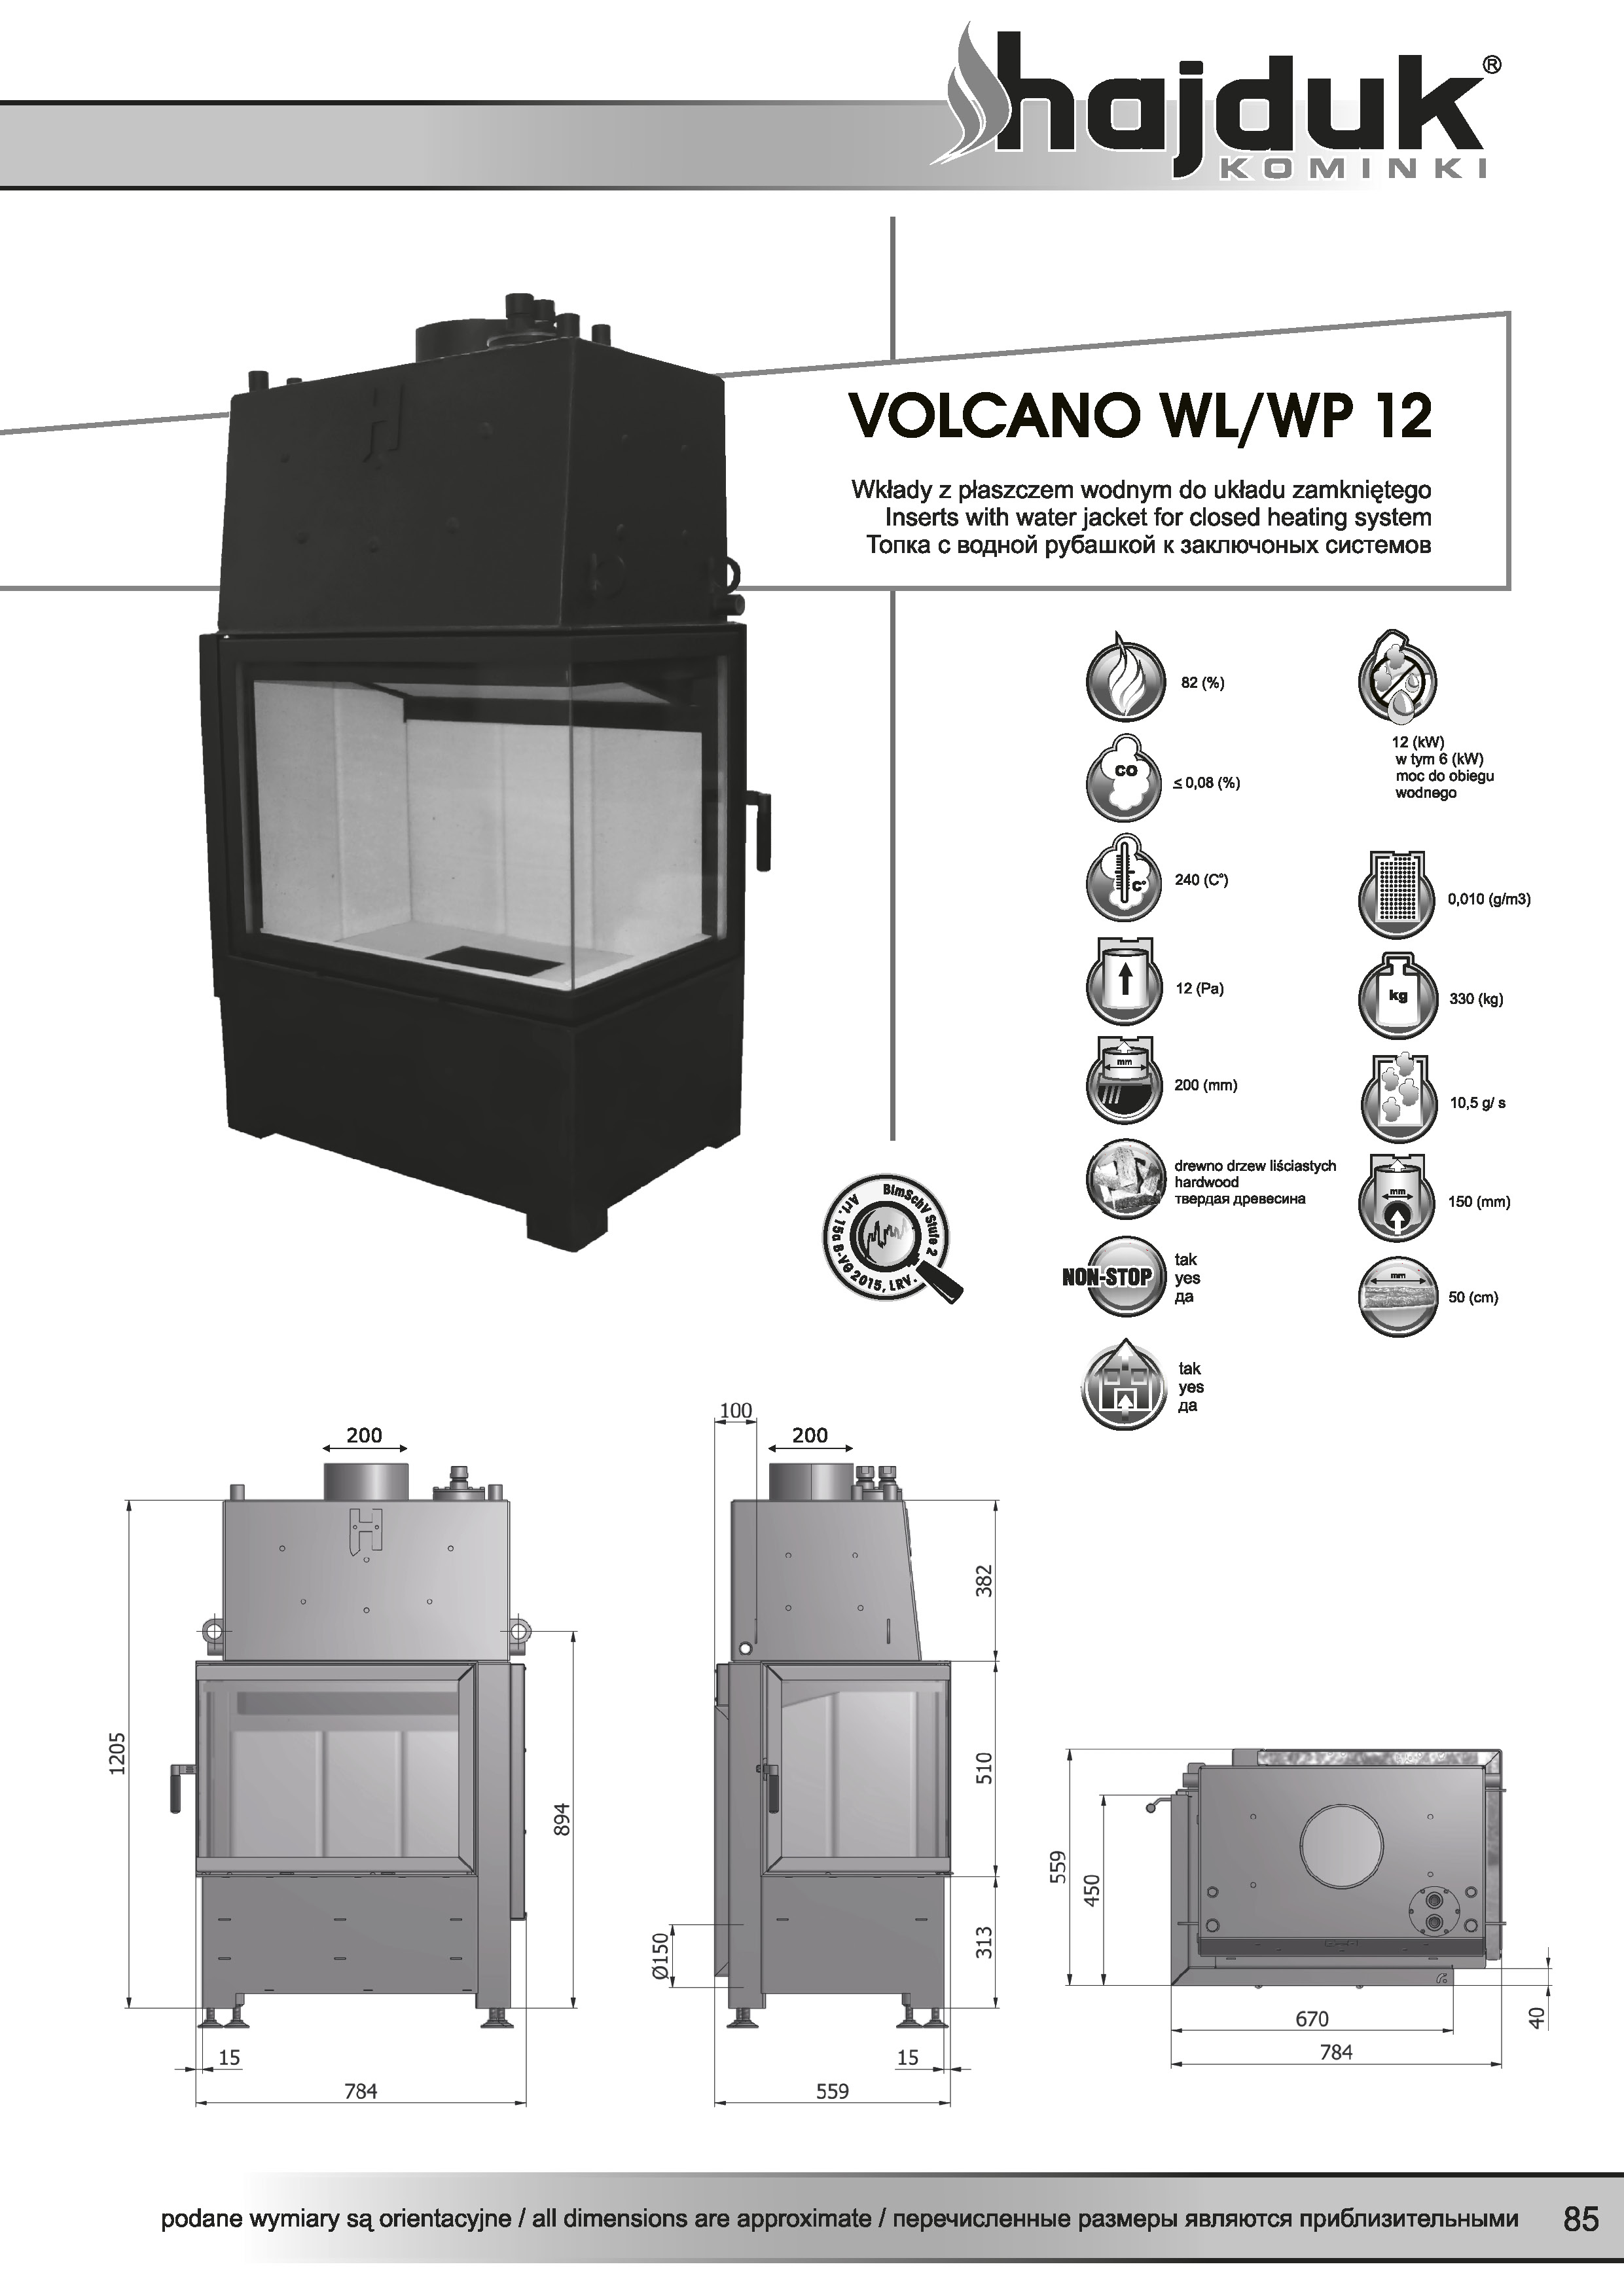 Volcano%20WL%20WP%20 %2012%20 %20karta%20techniczna - Krbová vložka Hajduk Volcano WLT 12